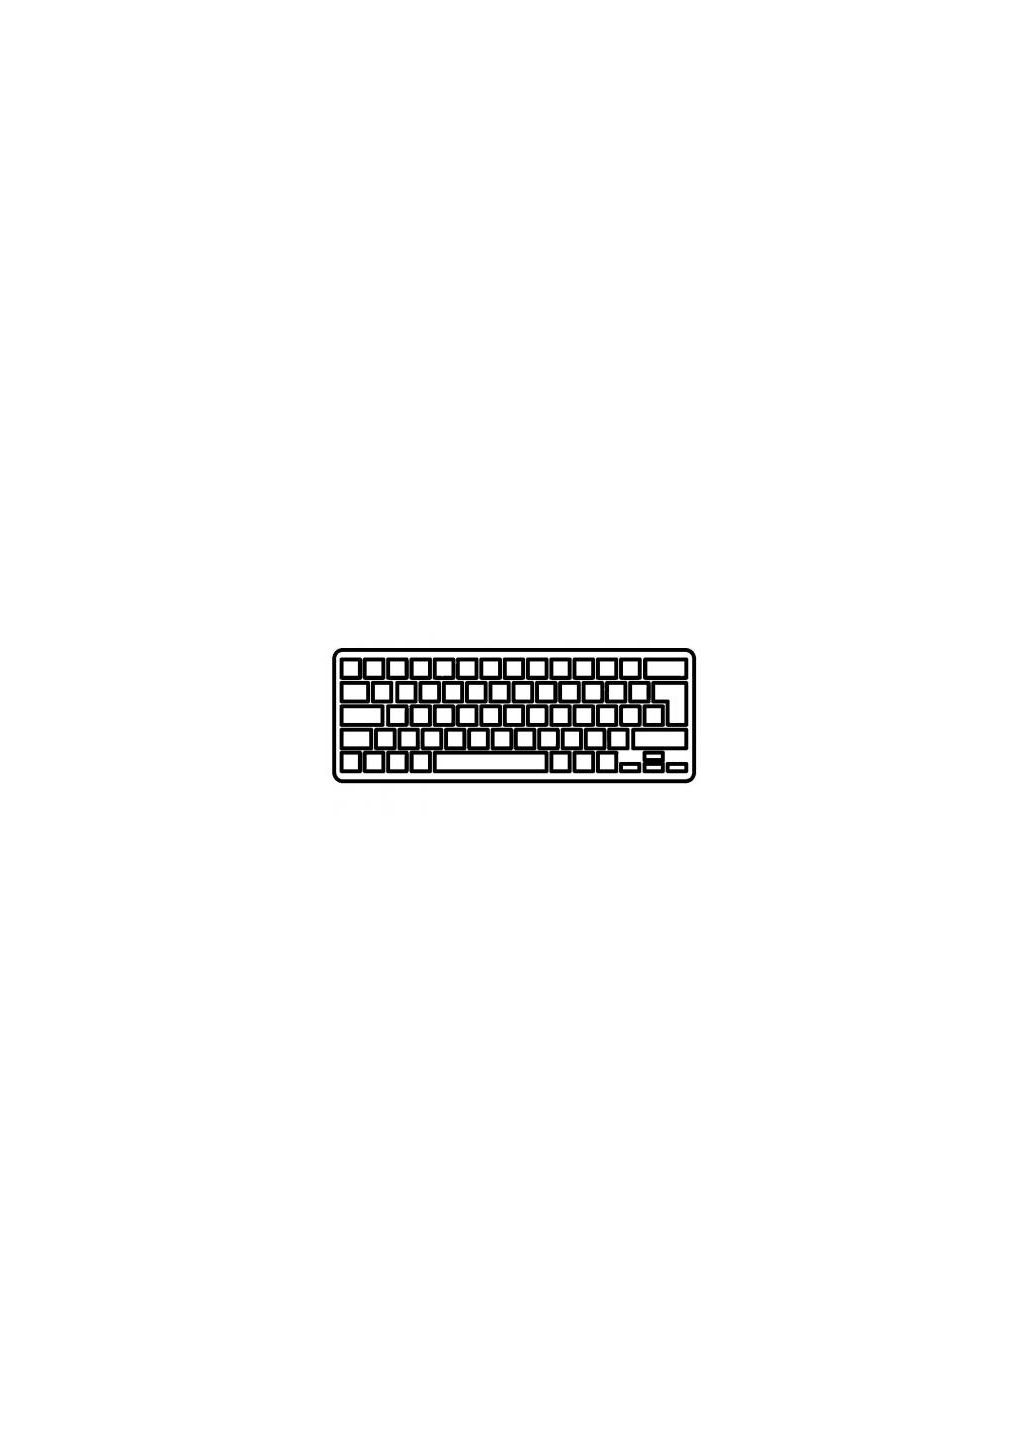 Клавиатура ноутбука Compaq Presario CQ32,dv34000 black,wo/frame,US (A45261) HP compaq presario cq32, dv3-4000 black, wo/frame, us (276707601)